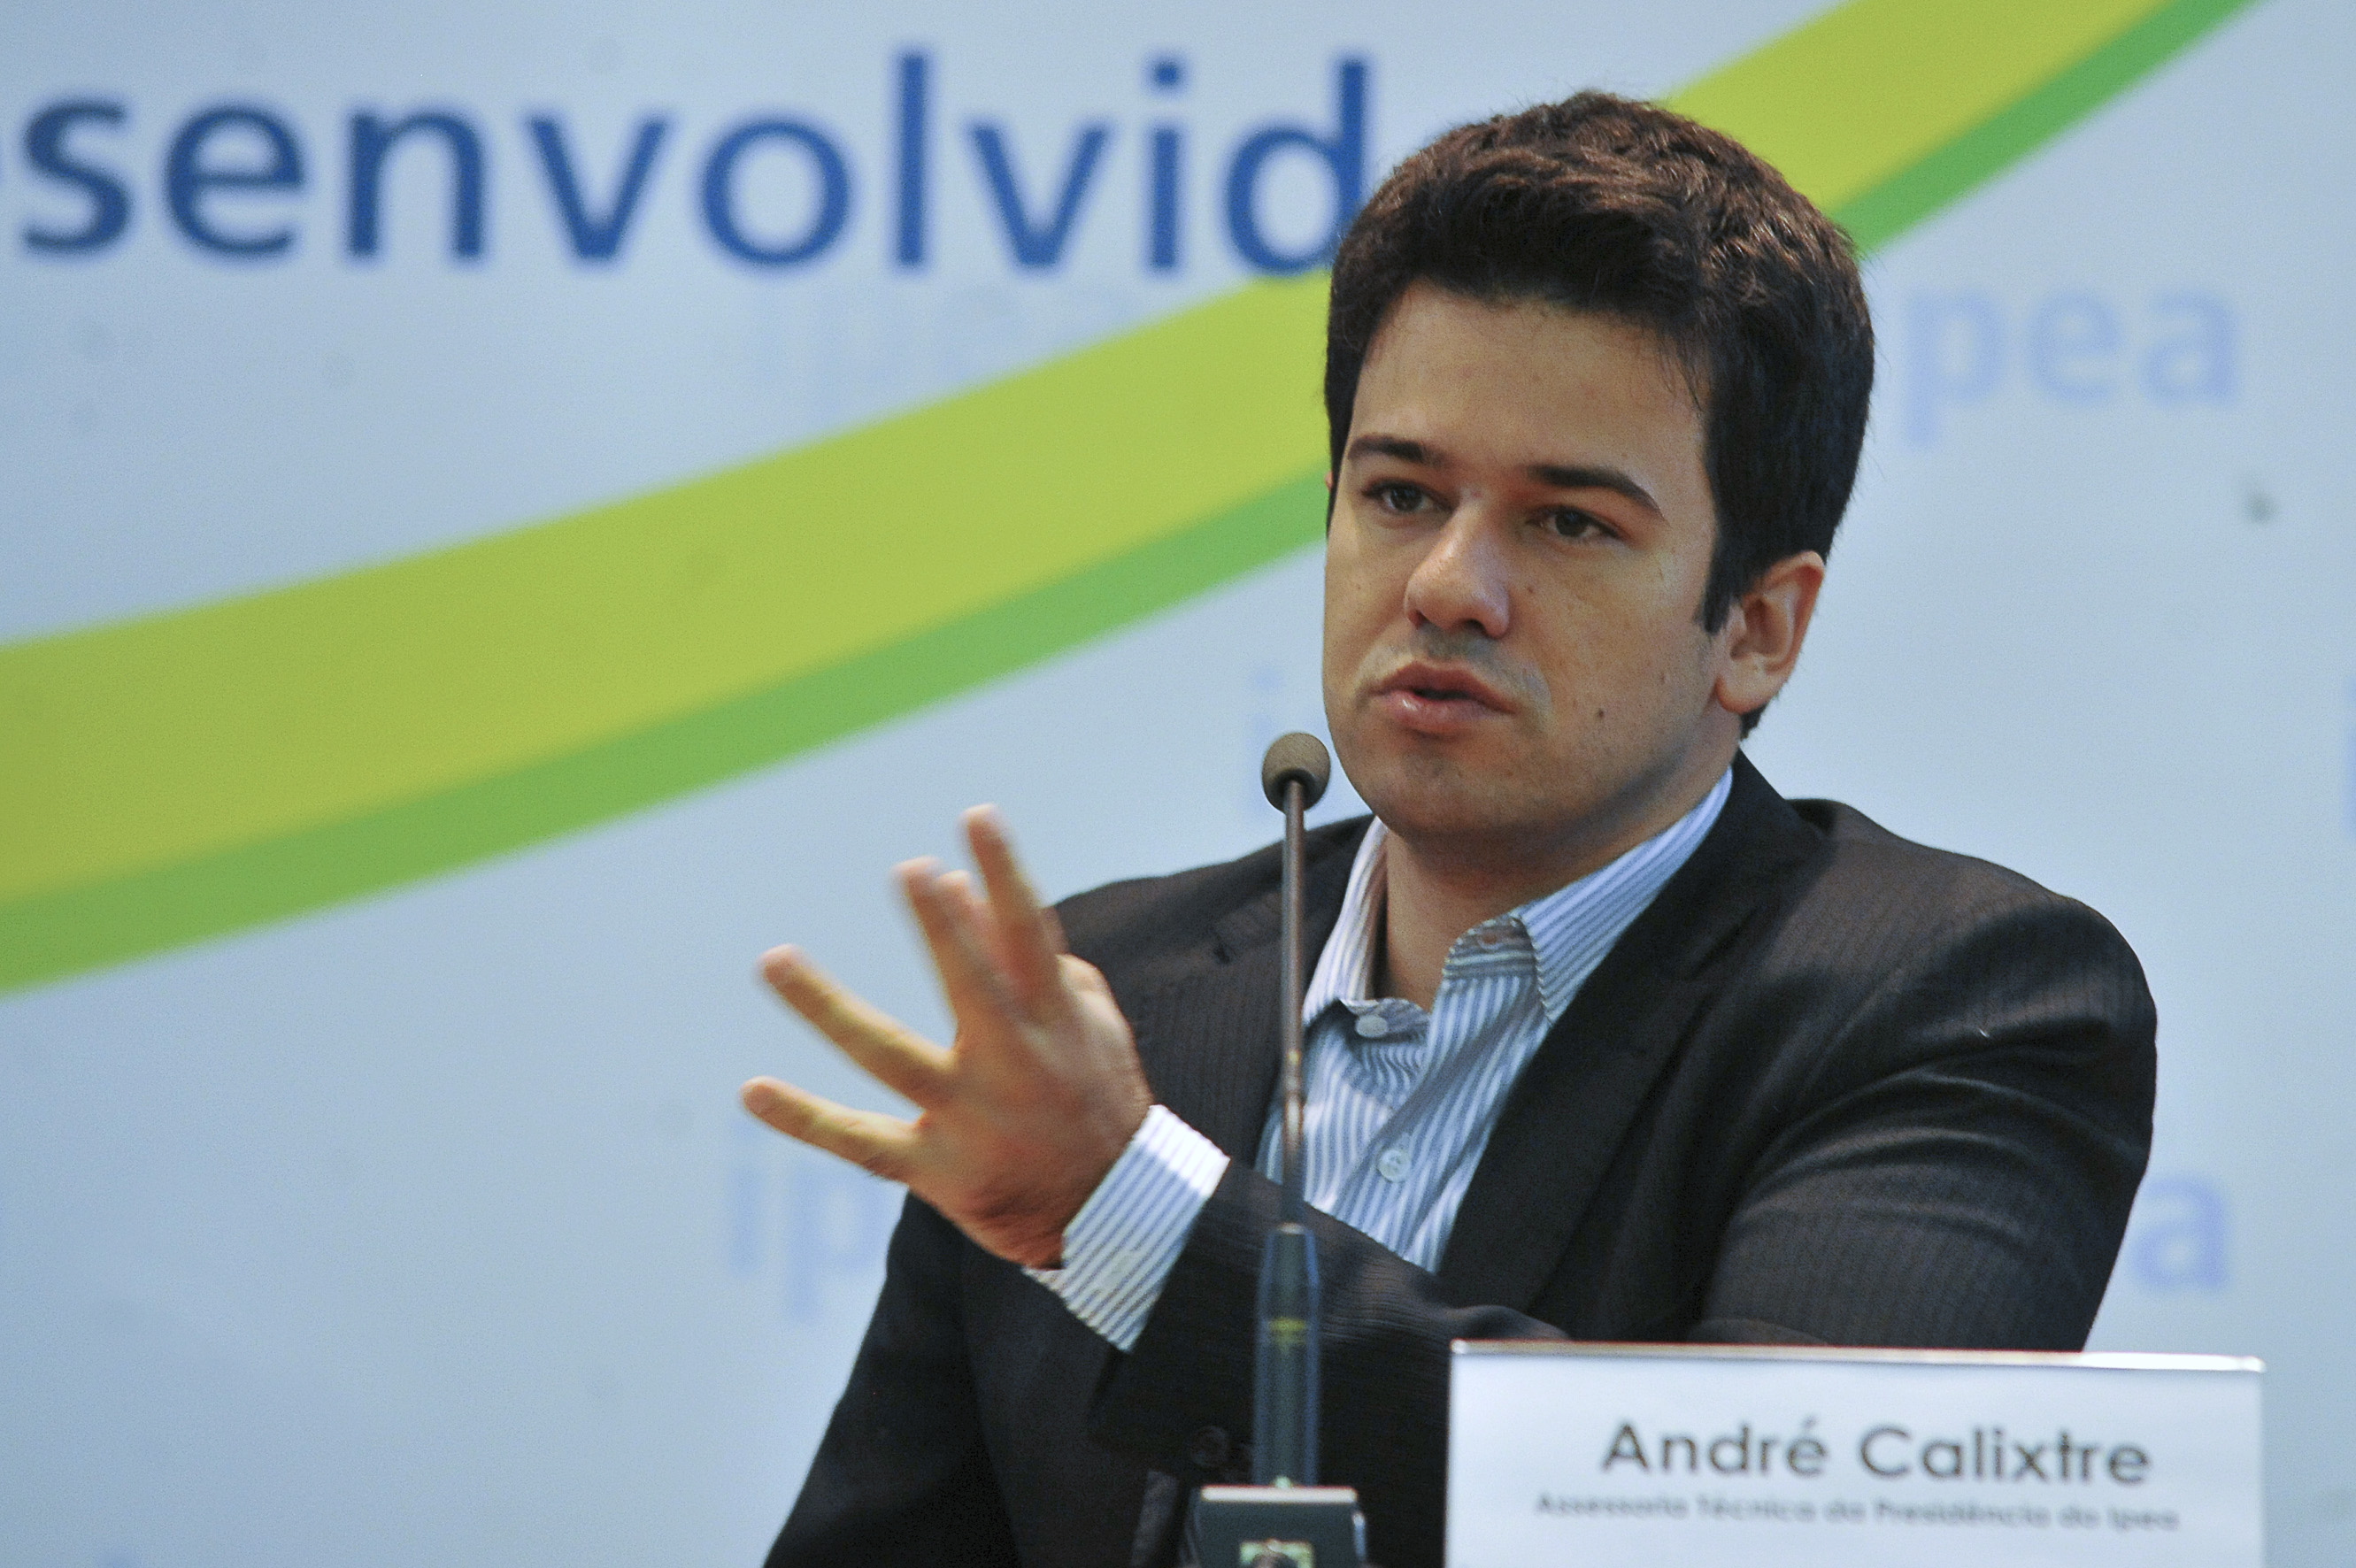 André Calixtre. Fotografia: Agência Brasil